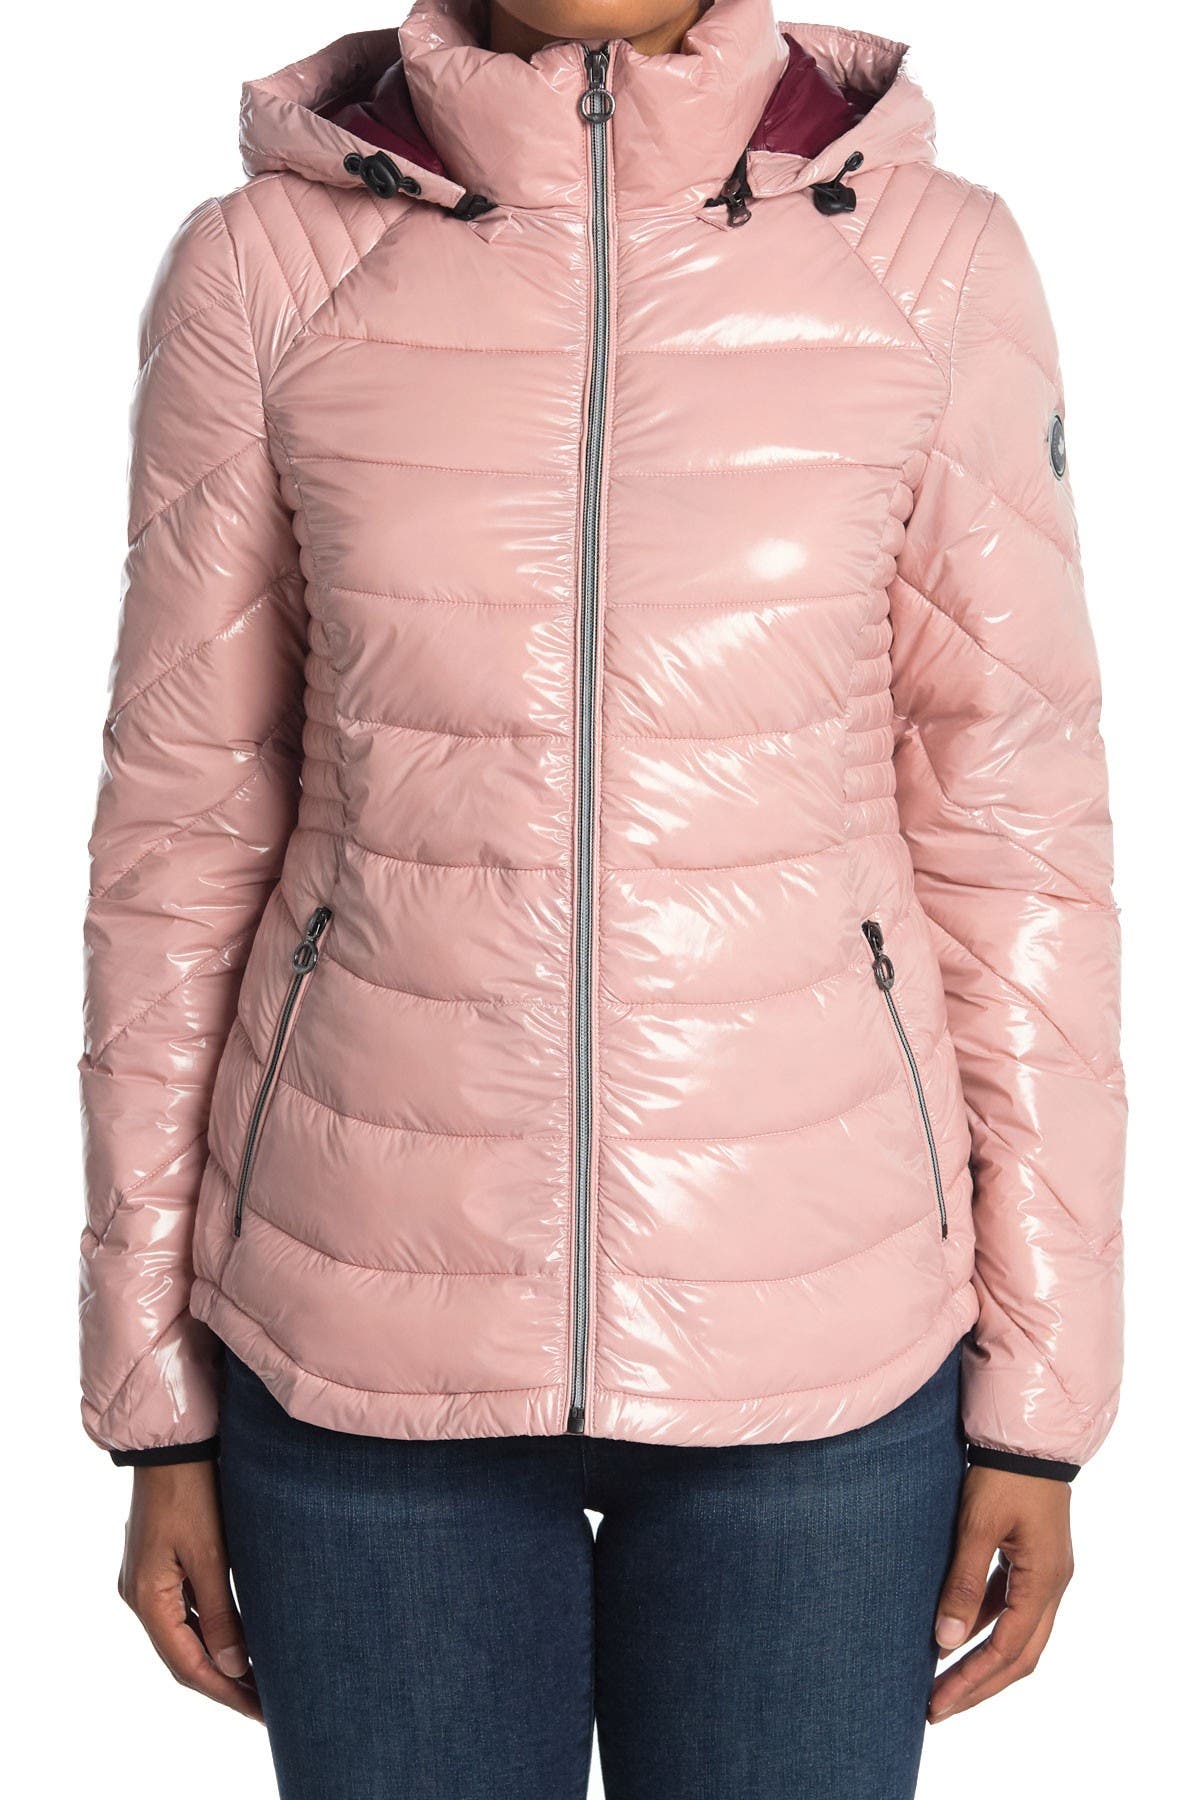 zara pink puffer jacket